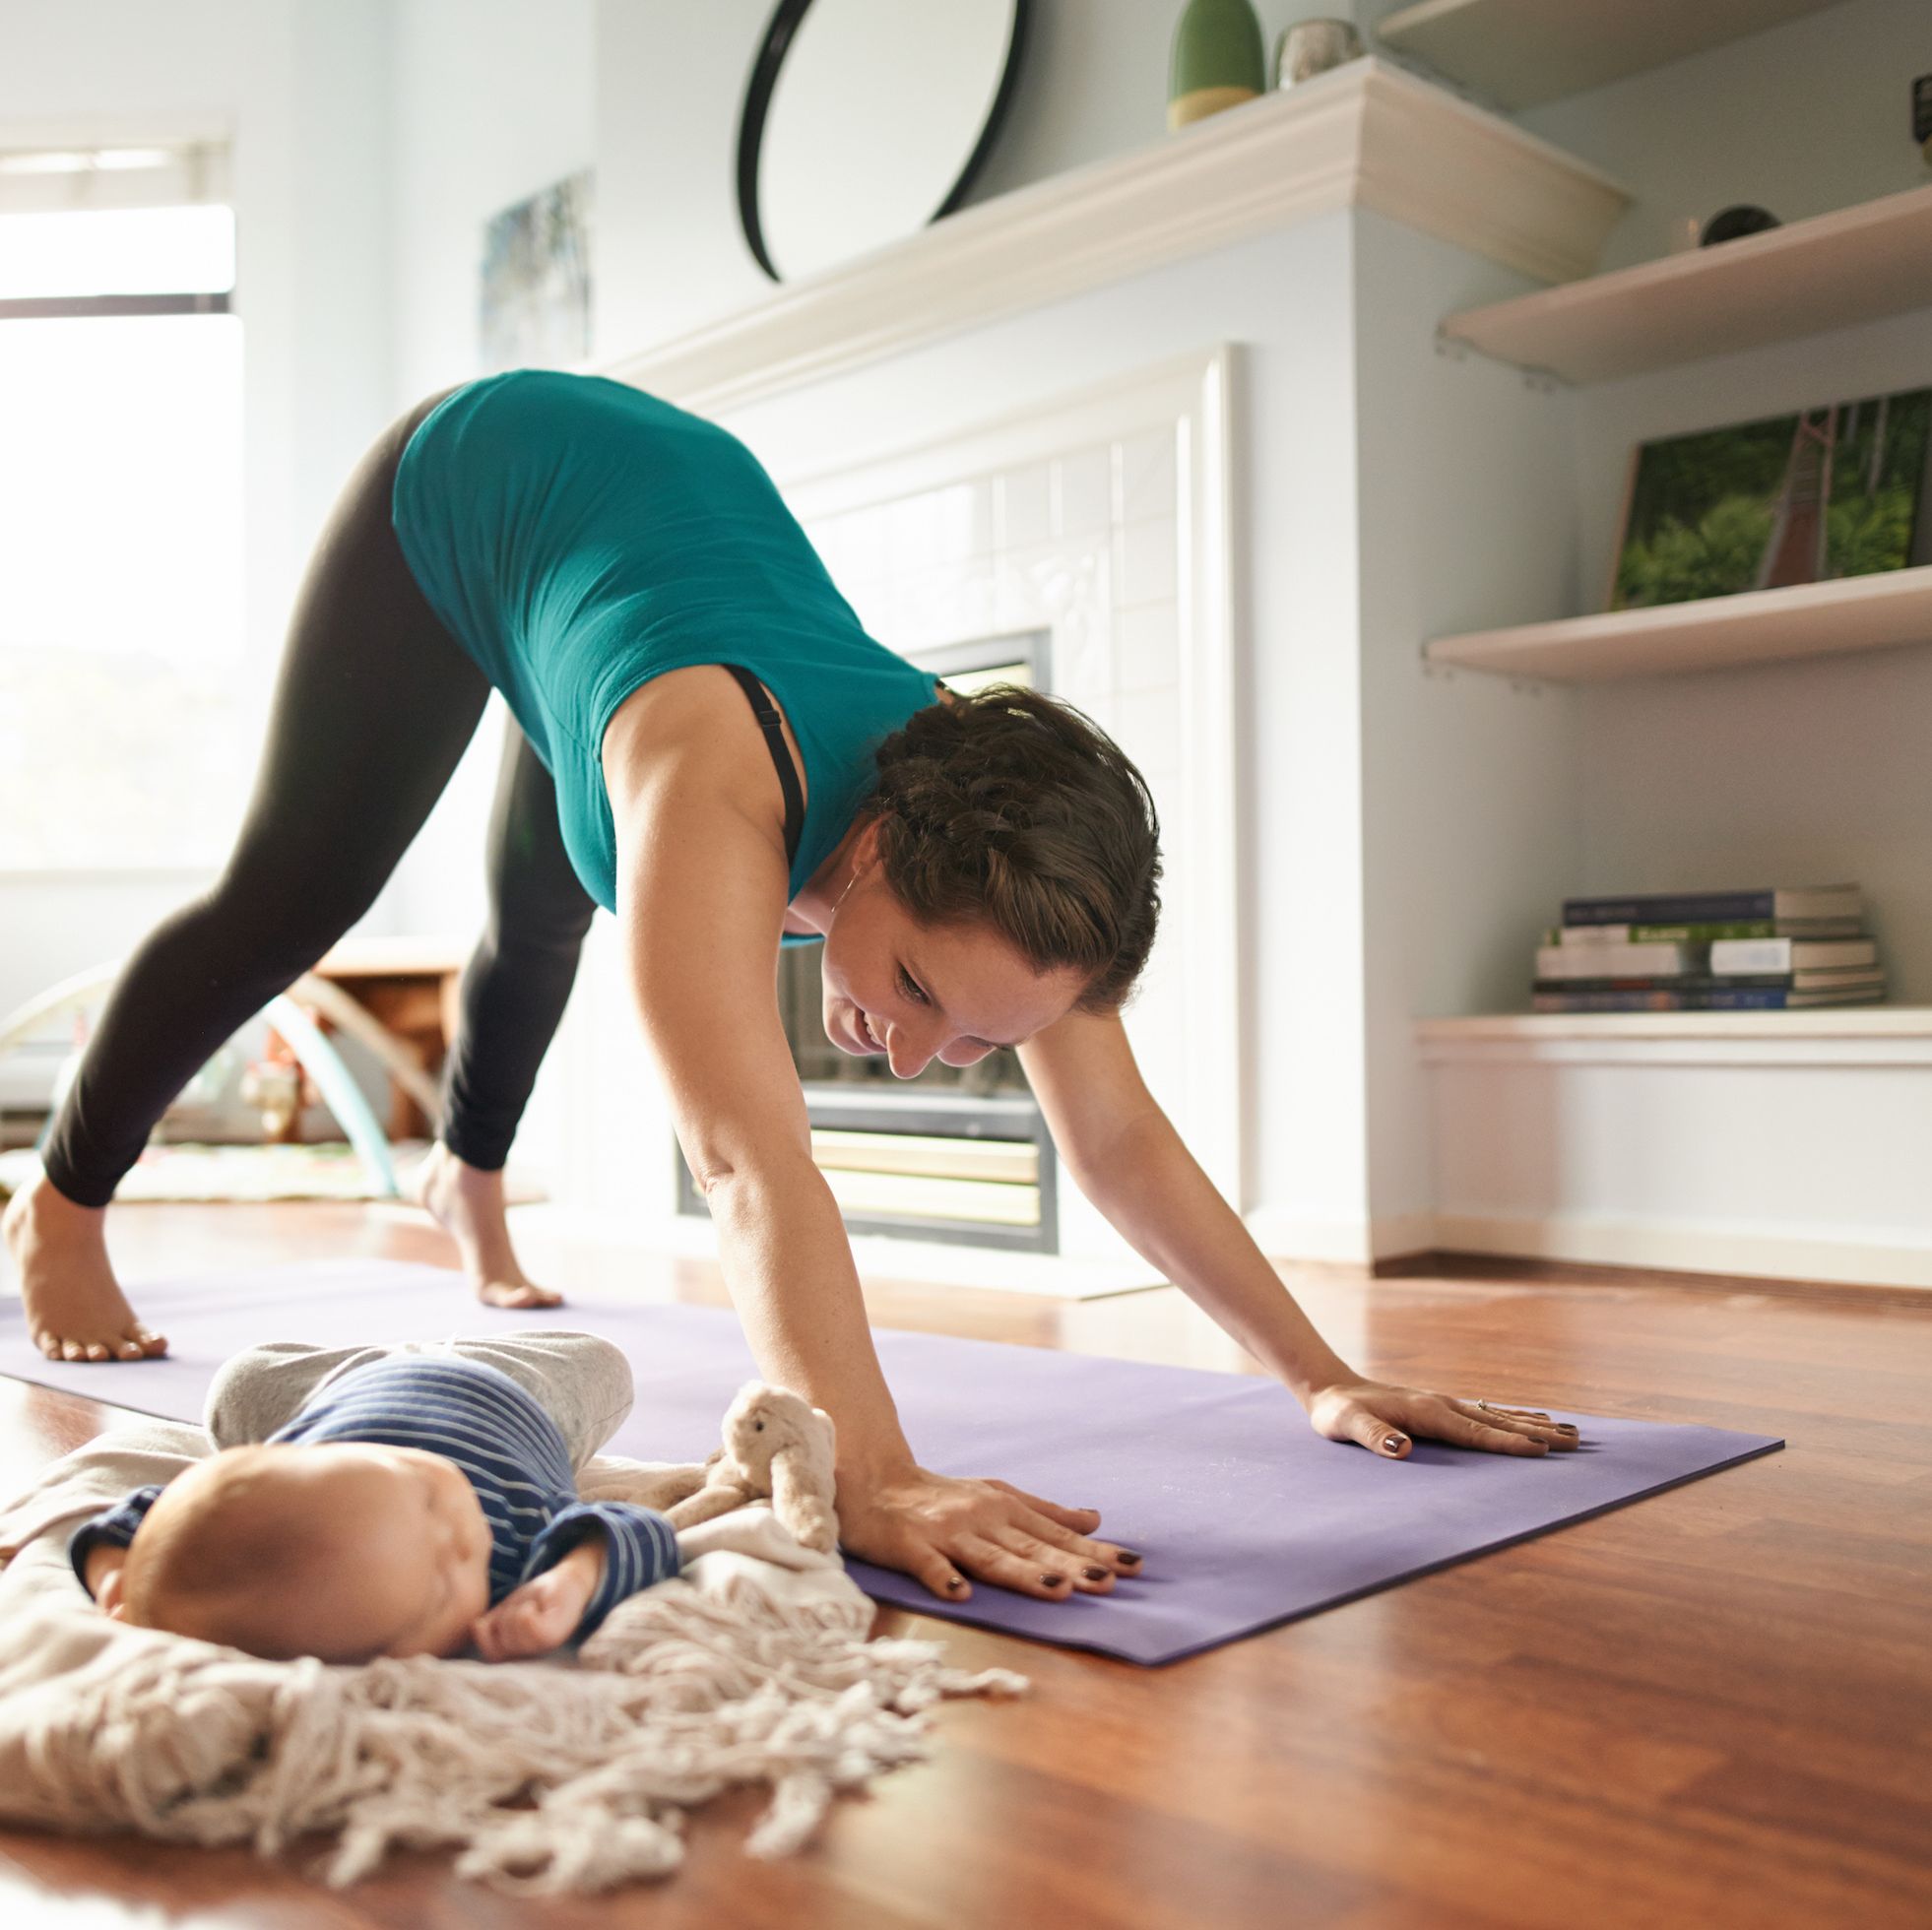 Postnatal Diastasis Recti: A Guide to Exercise and Nutrition